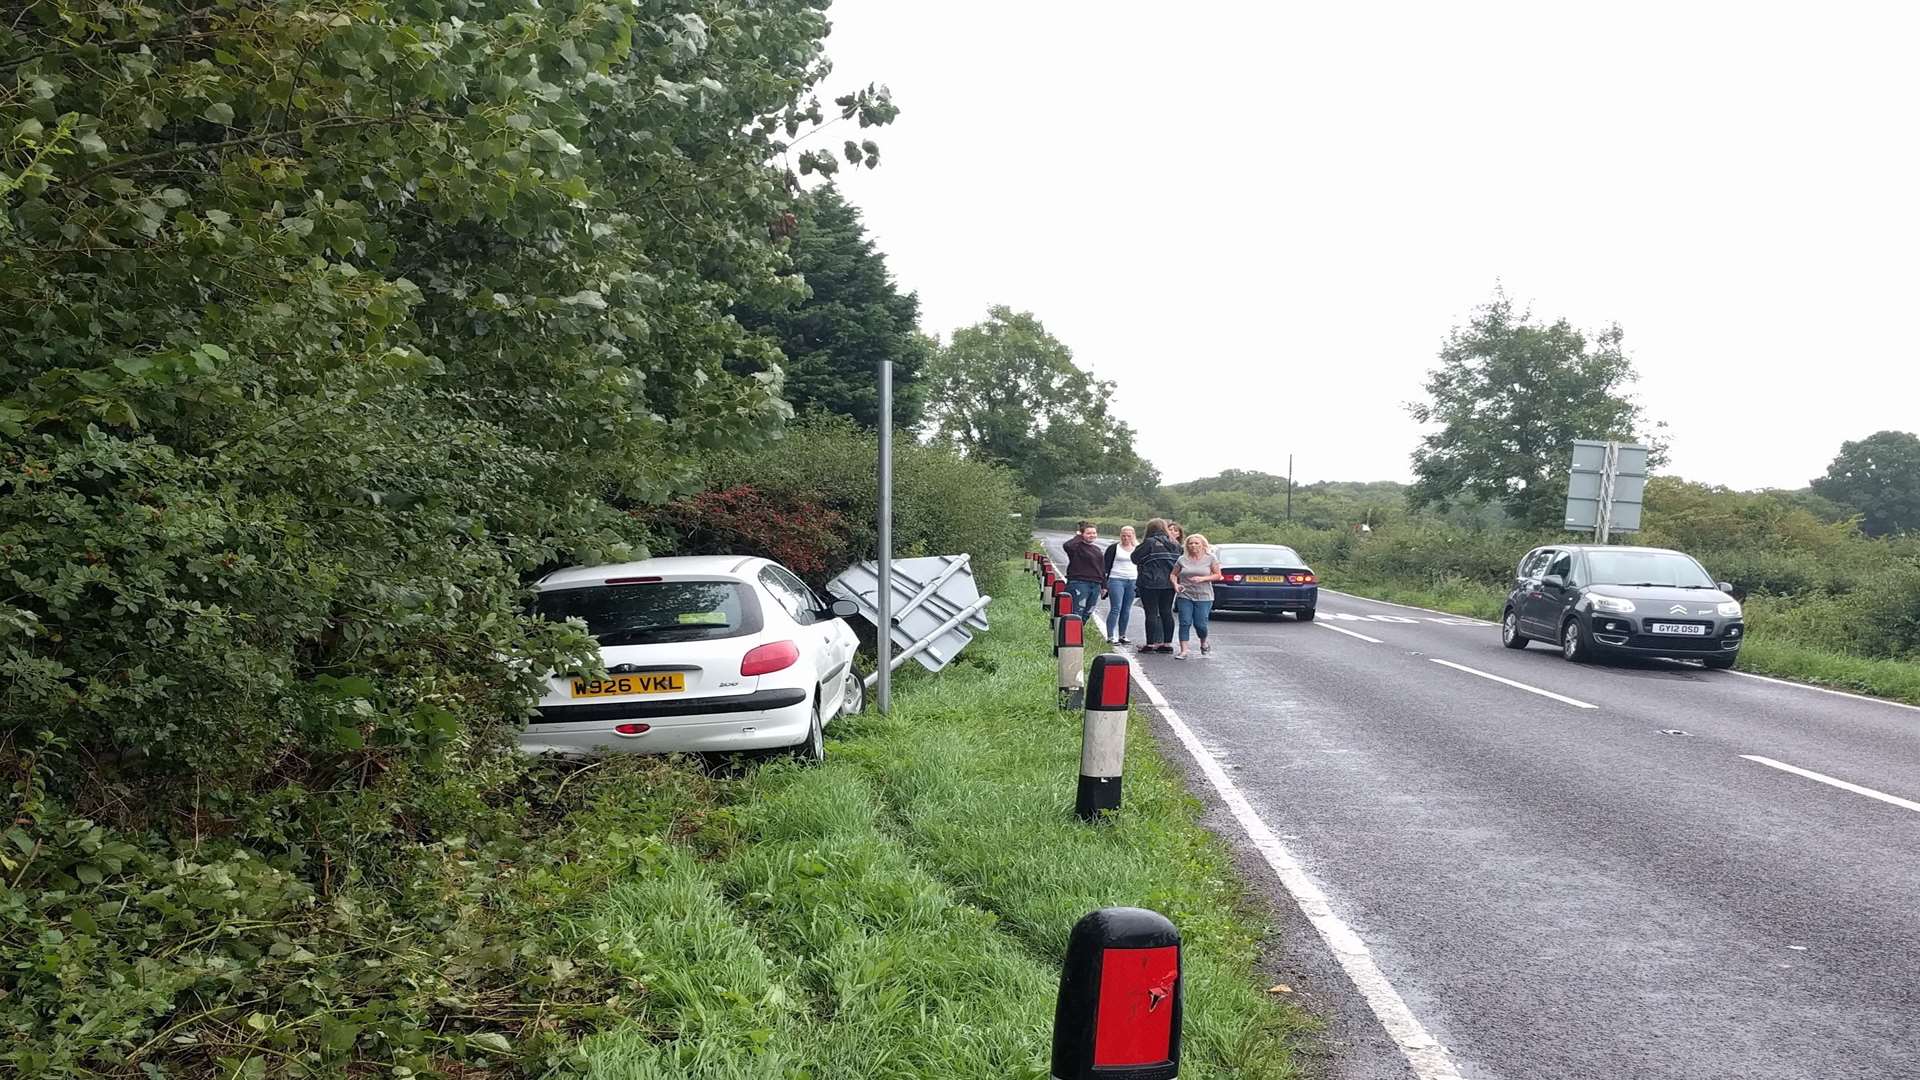 The scene of a crash near Bromley Green